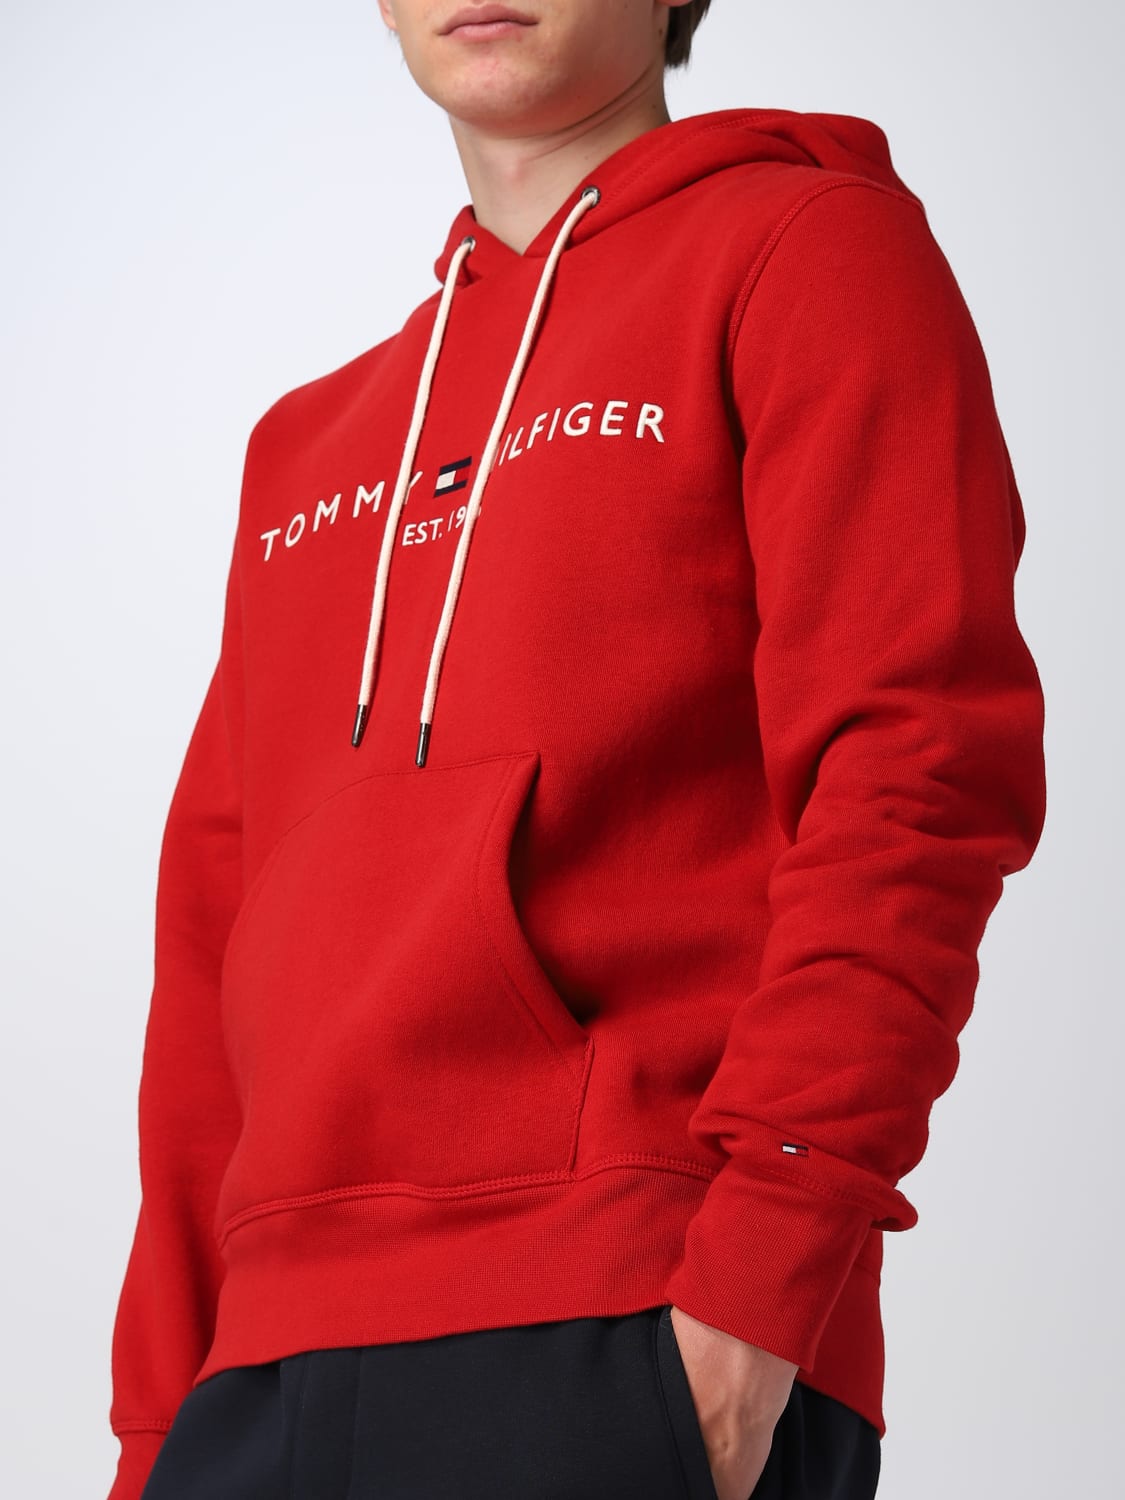 TOMMY HILFIGER: Sweatshirt homme - Rouge  Sweatshirt Tommy Hilfiger  MW0MW11599 en ligne sur